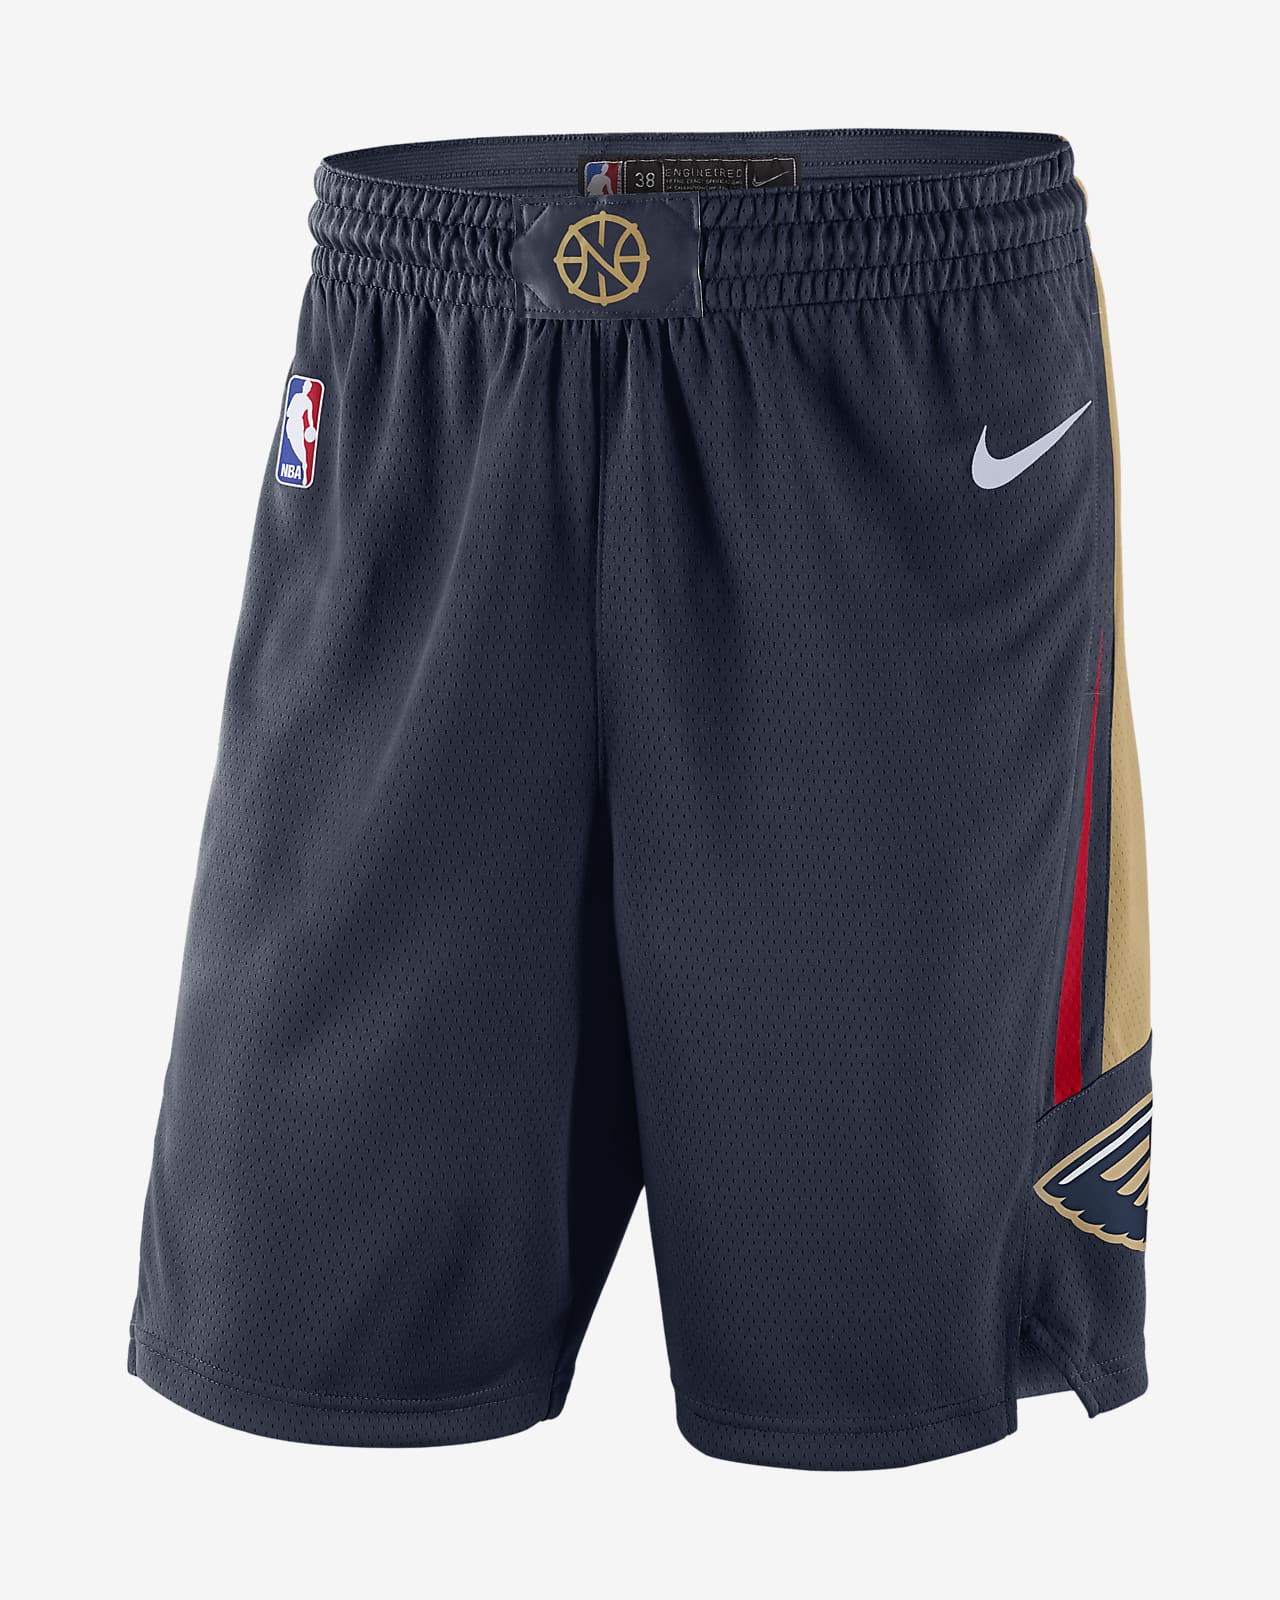 New Orleans Pelicans Icon Edition Men's Nike NBA Swingman Shorts